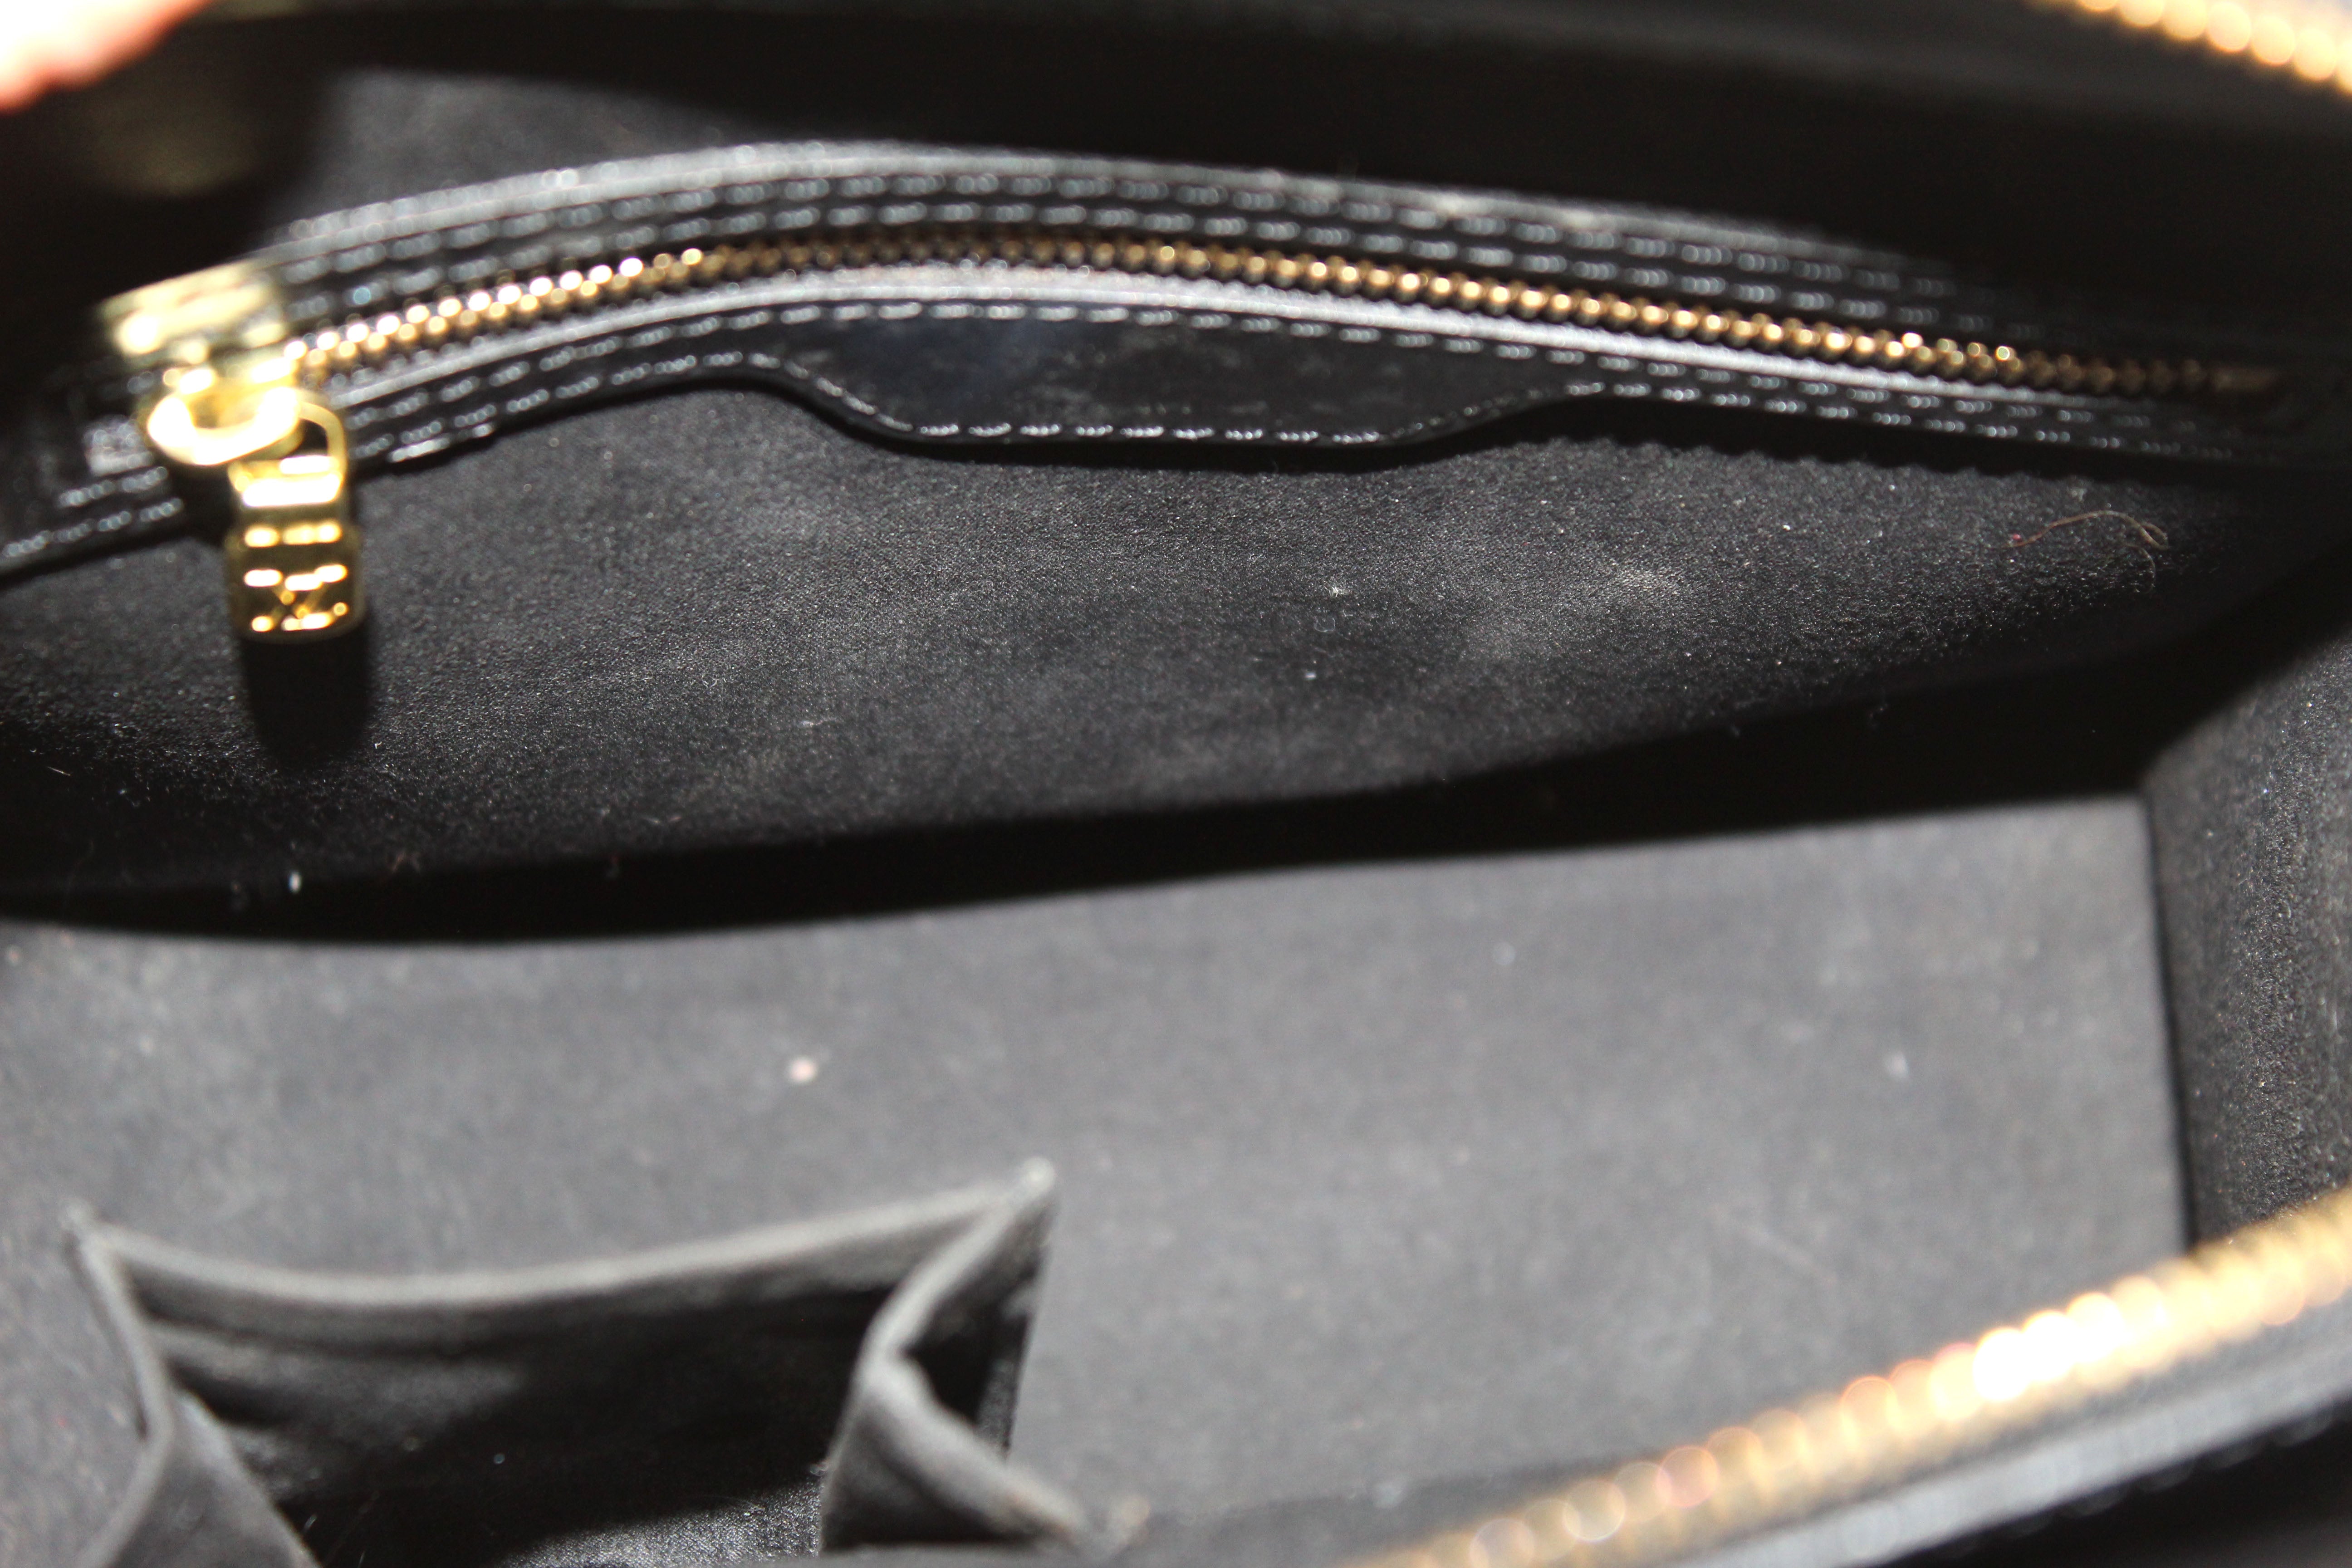 Louis Vuitton Figari PM M5201D Epi Leather Mocha FL0023 Ladies Handbag